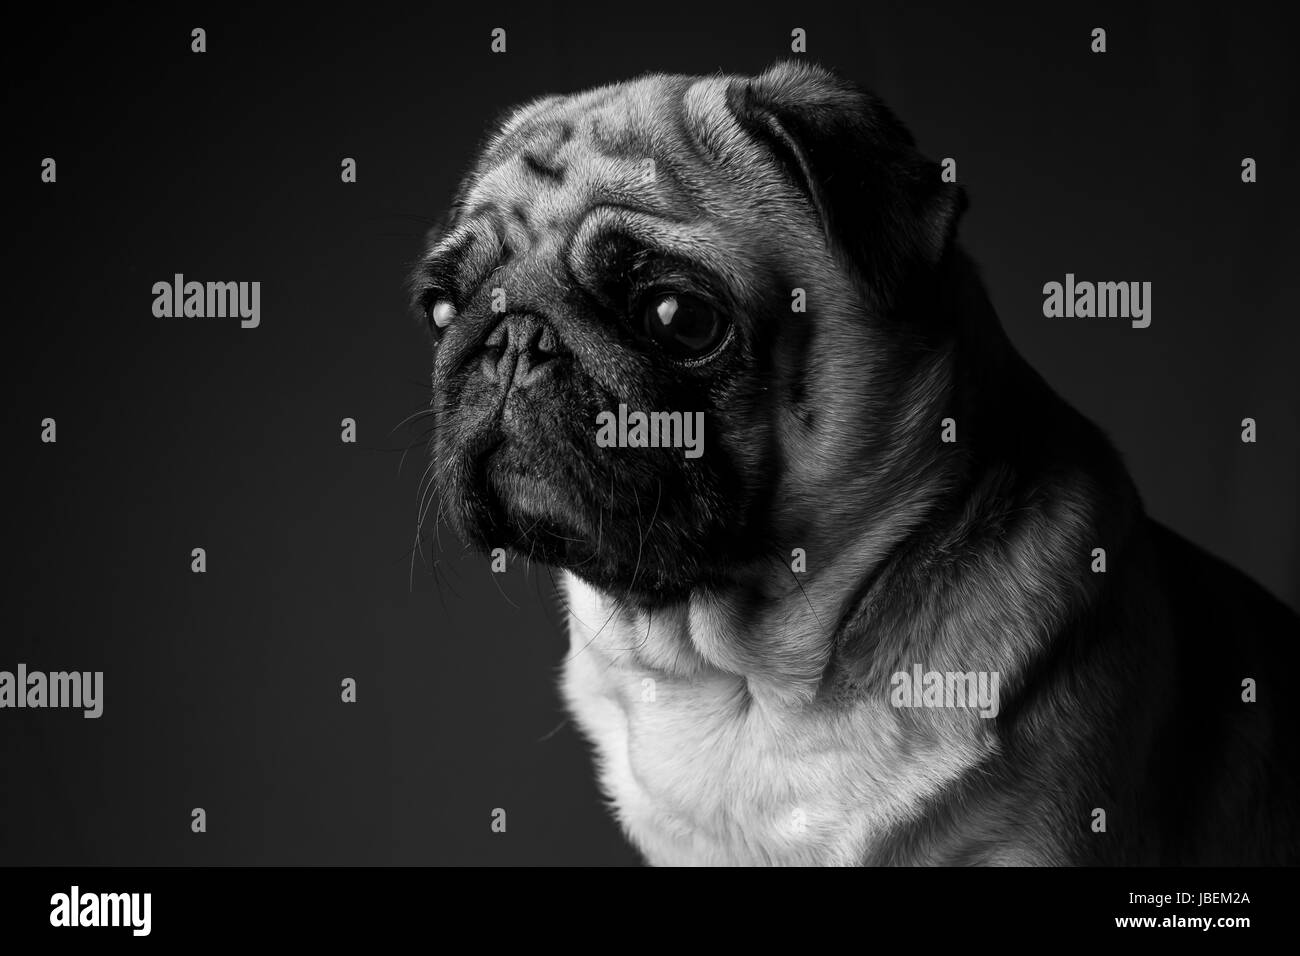 Pug hund Black and White Stock Photos & Images - Alamy